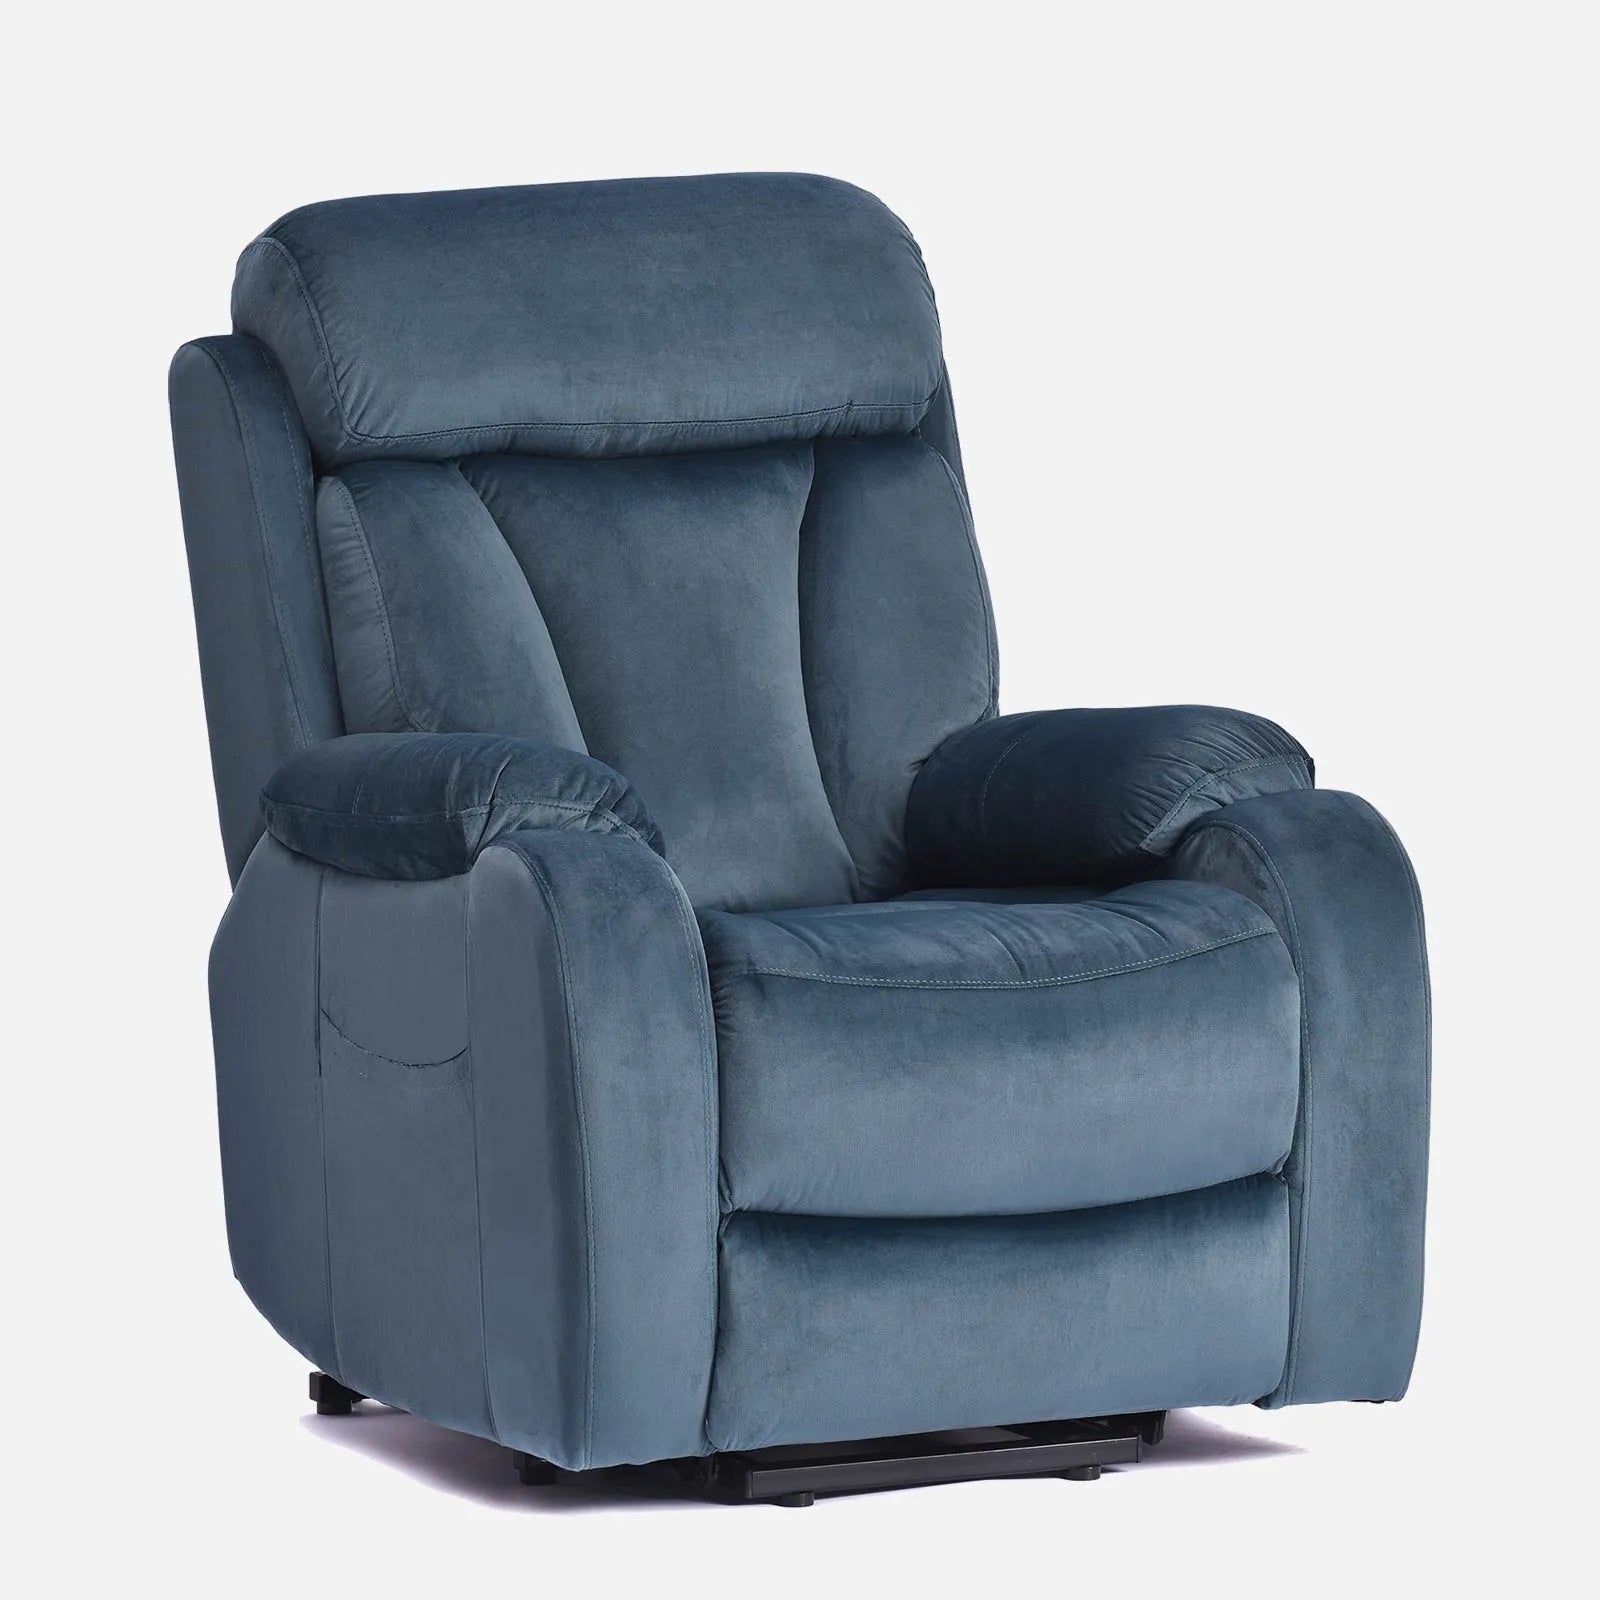 nave blue lift recliner chair for elderly